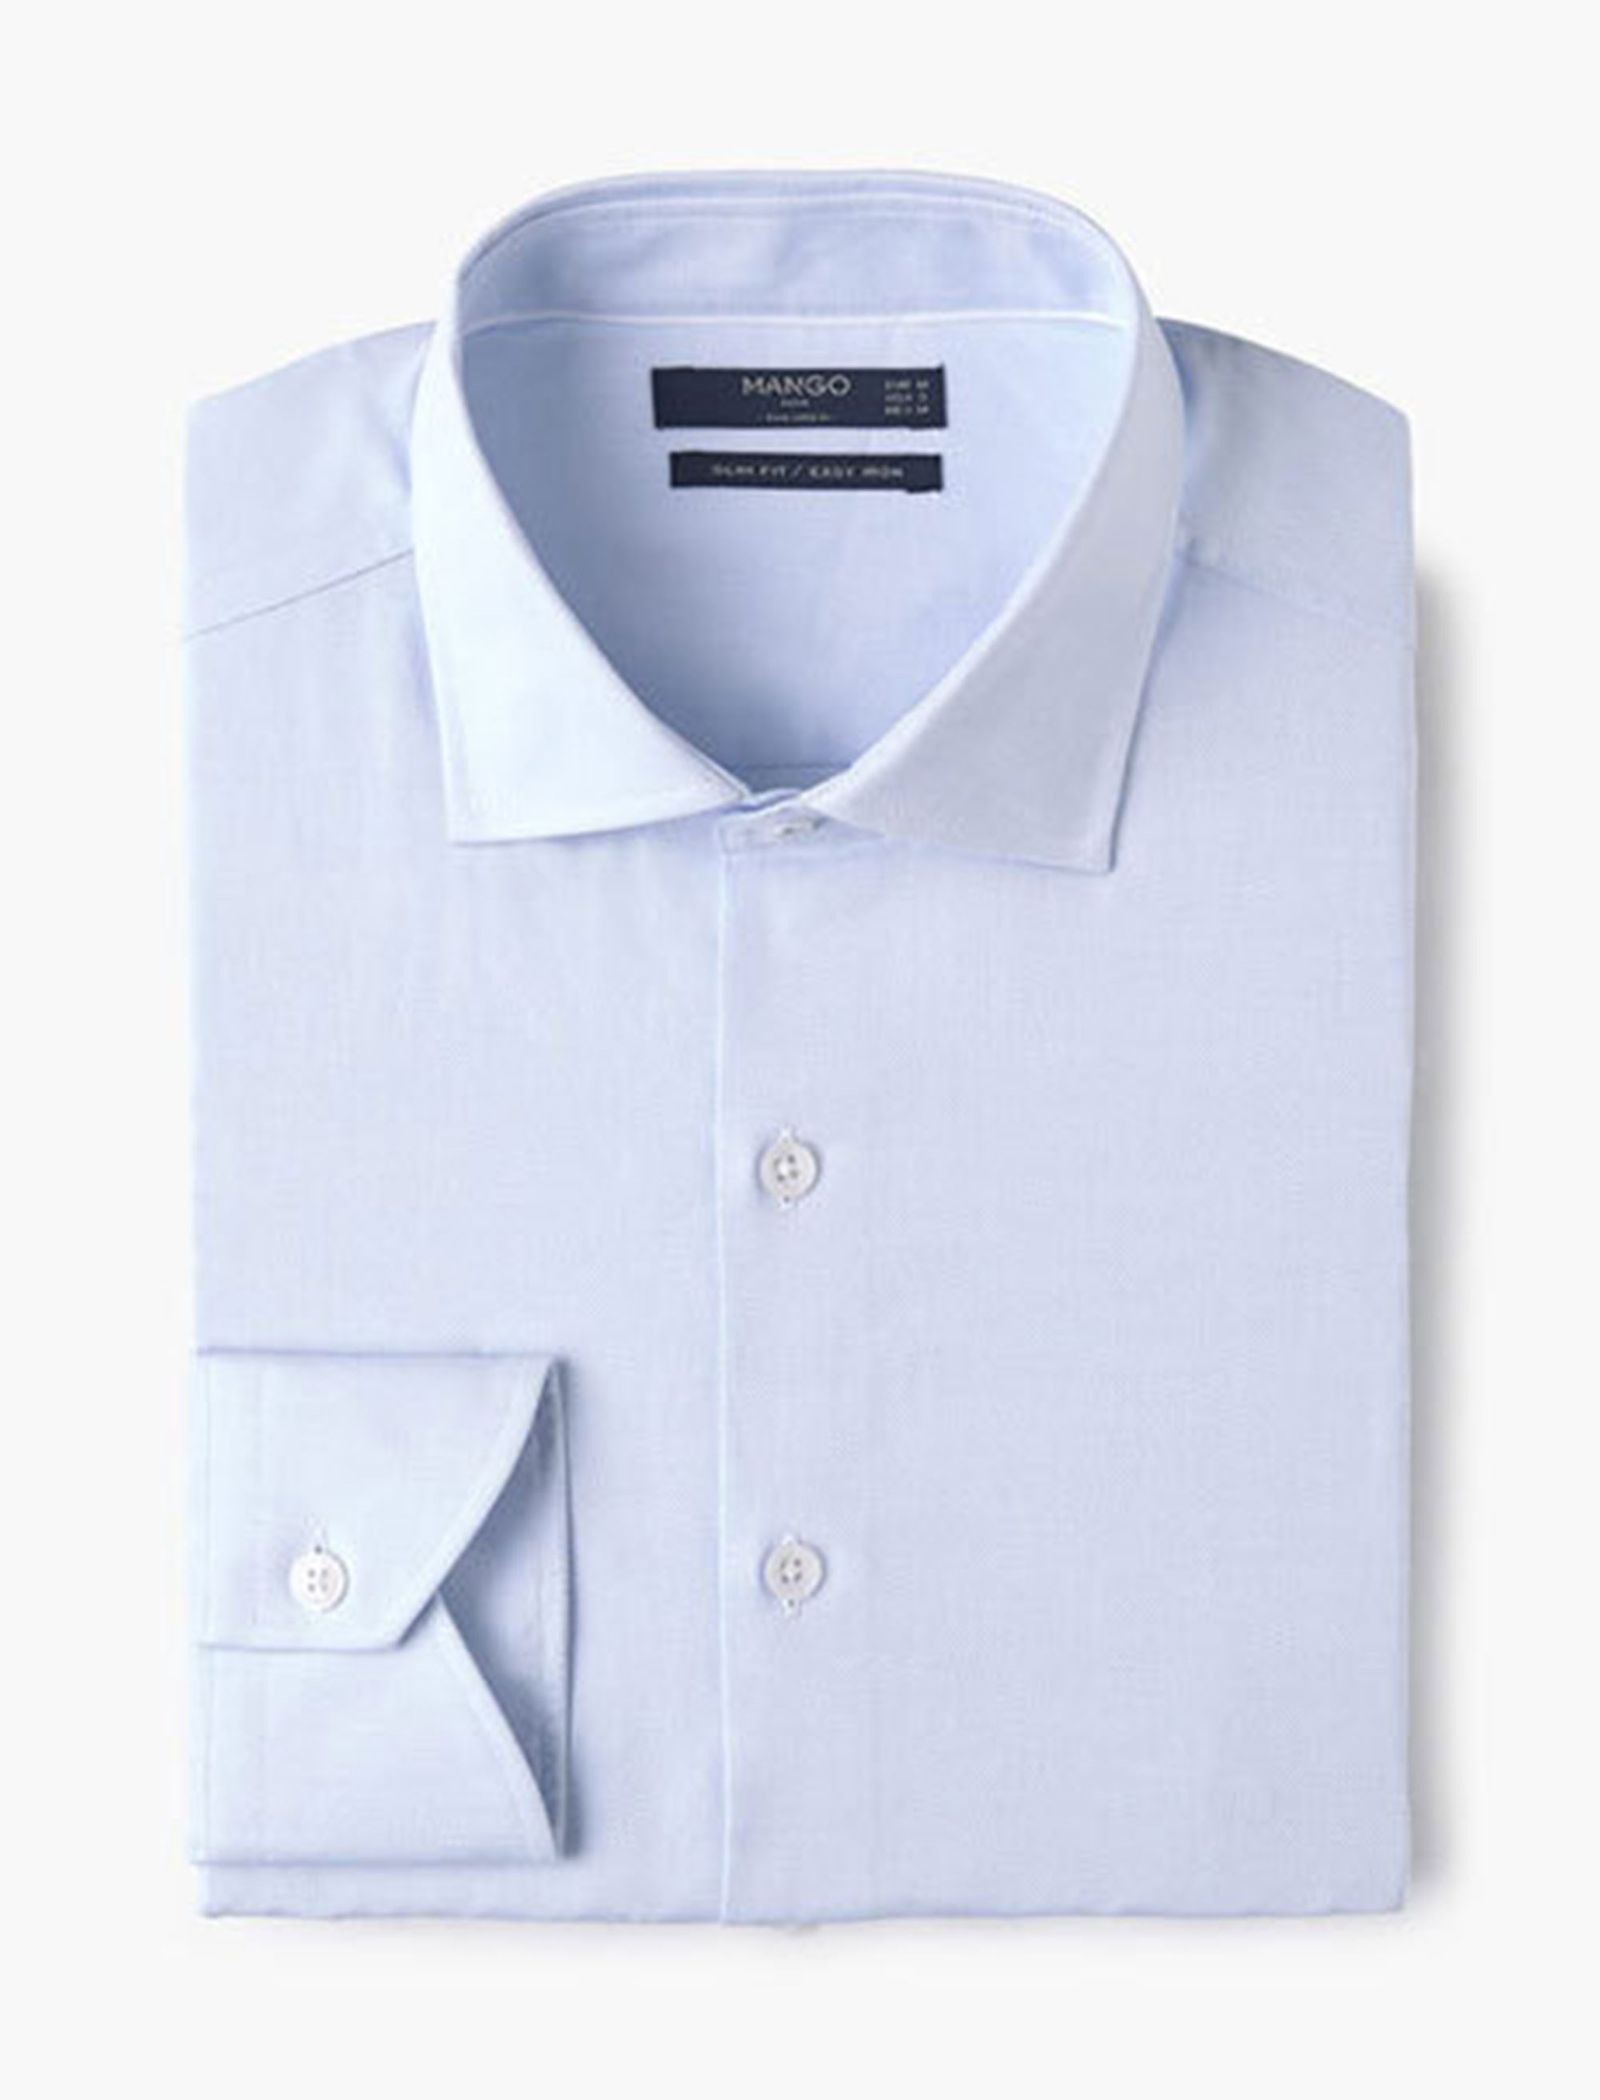 پیراهن رسمی مردانه - مانگو - آبي روشن - 8